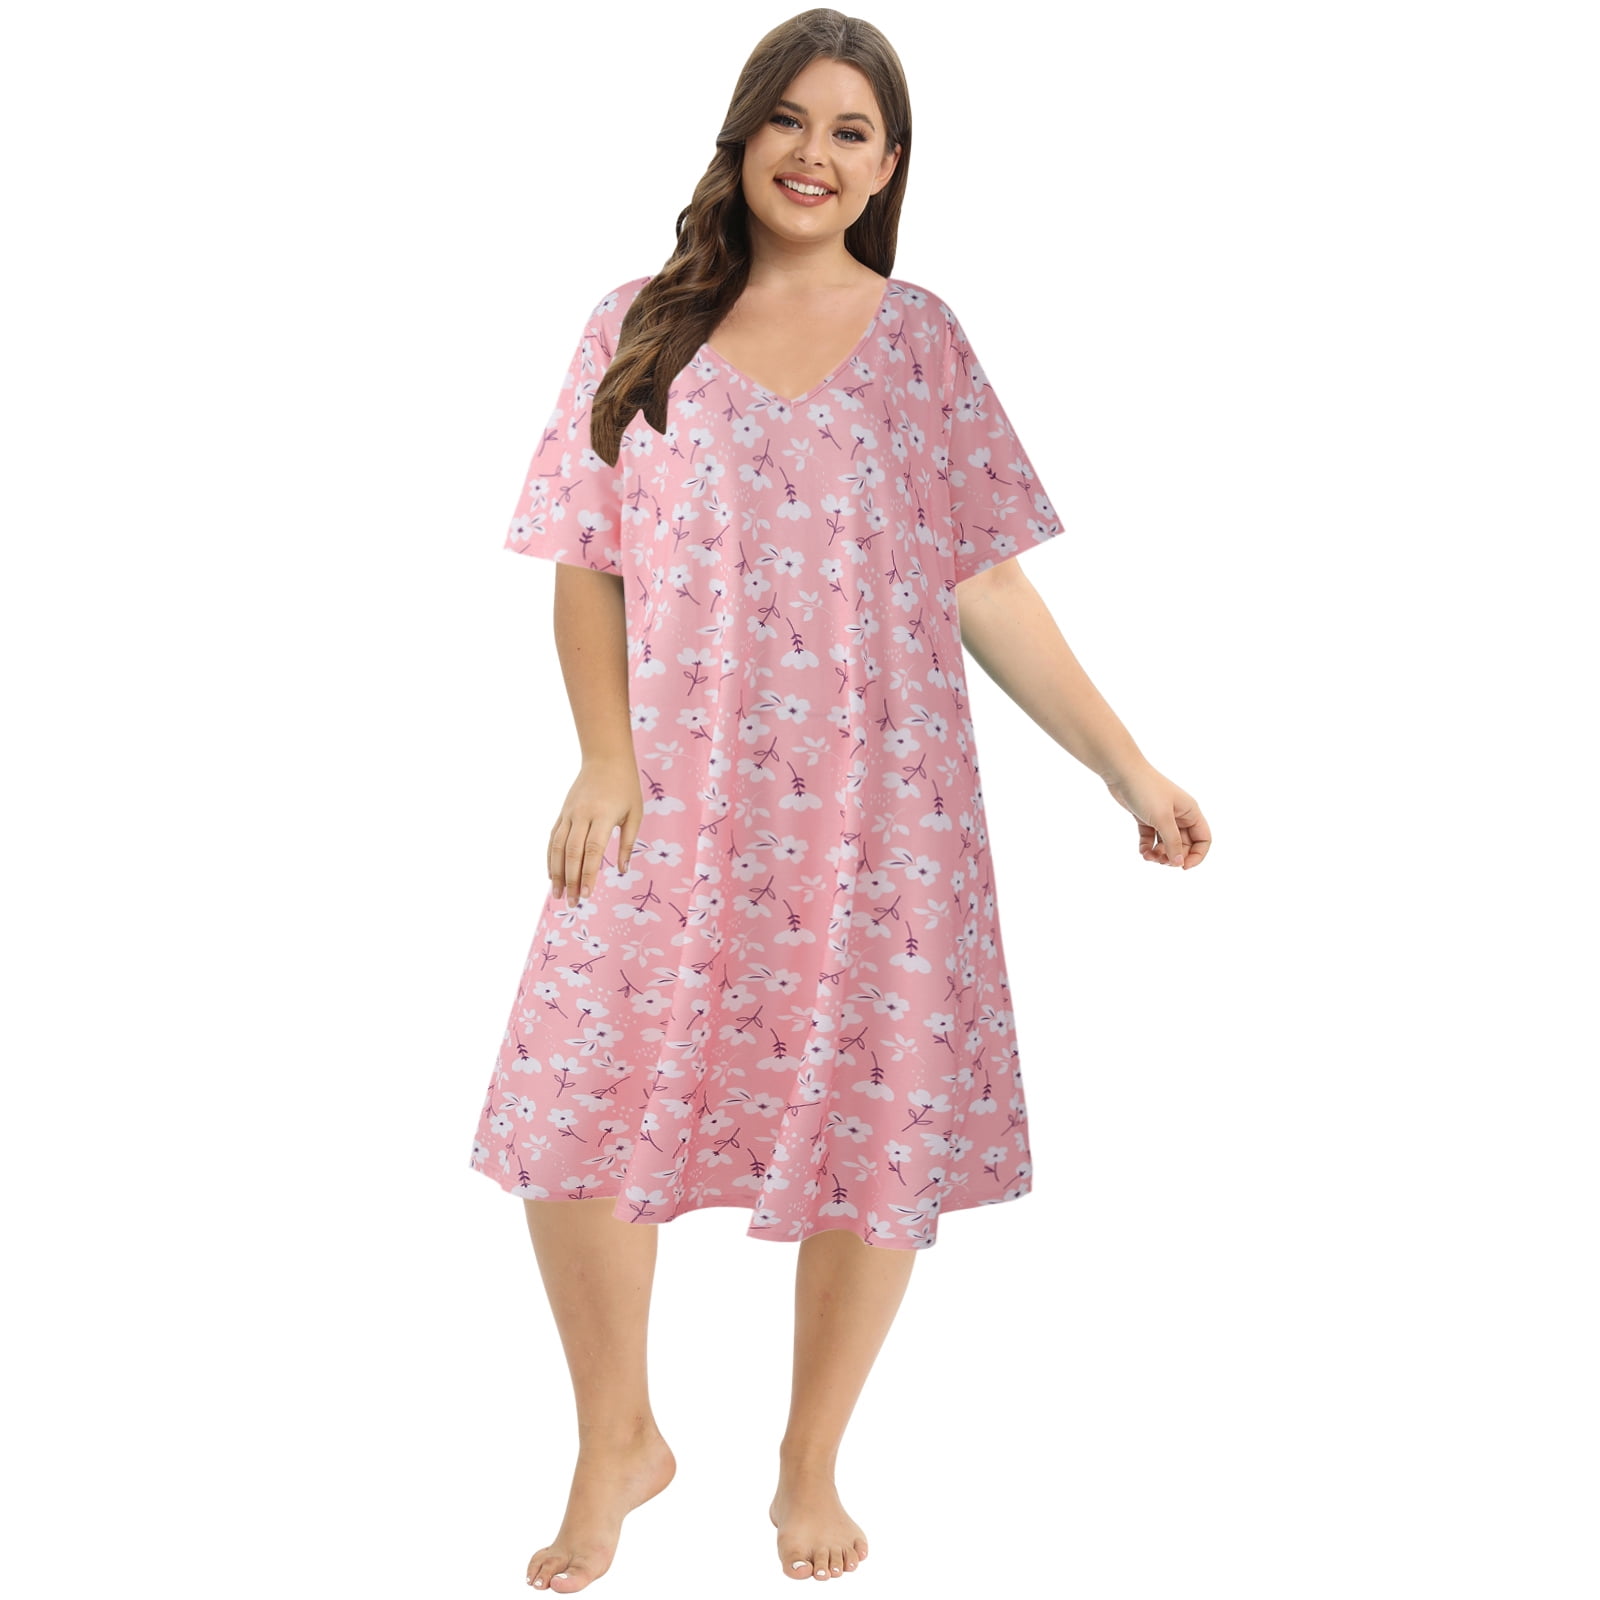 Valcatch Women's Nightgown Plus Size Printed Sleepshirts V Neck Short ...